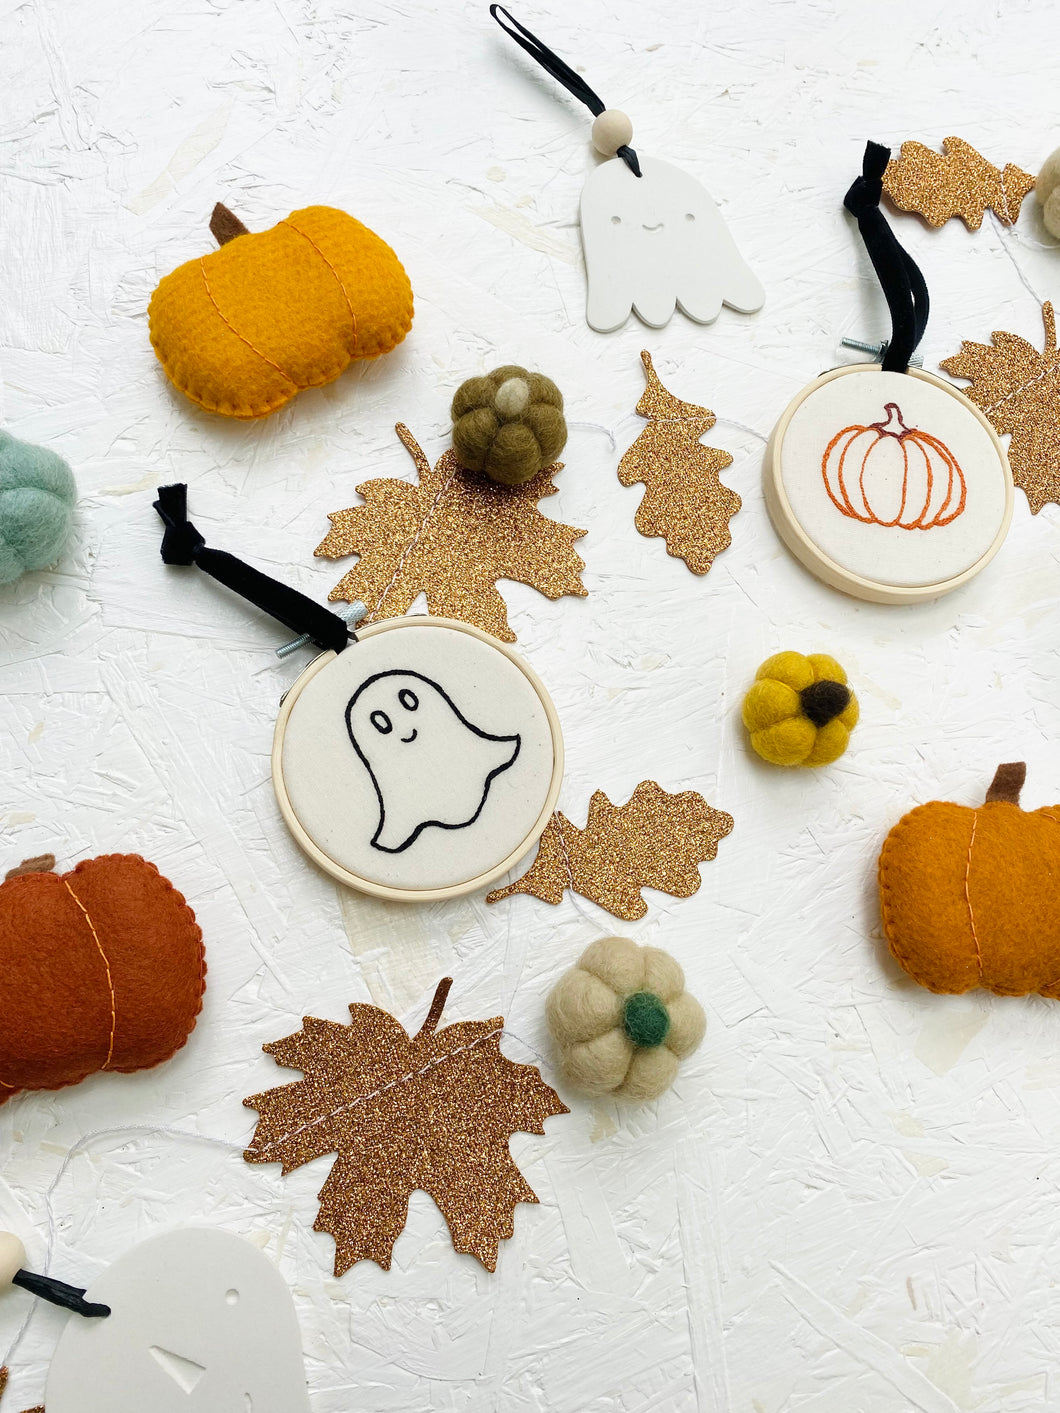 Halloween Collection Spooky Ghost or Pumpkin Mini Hoop